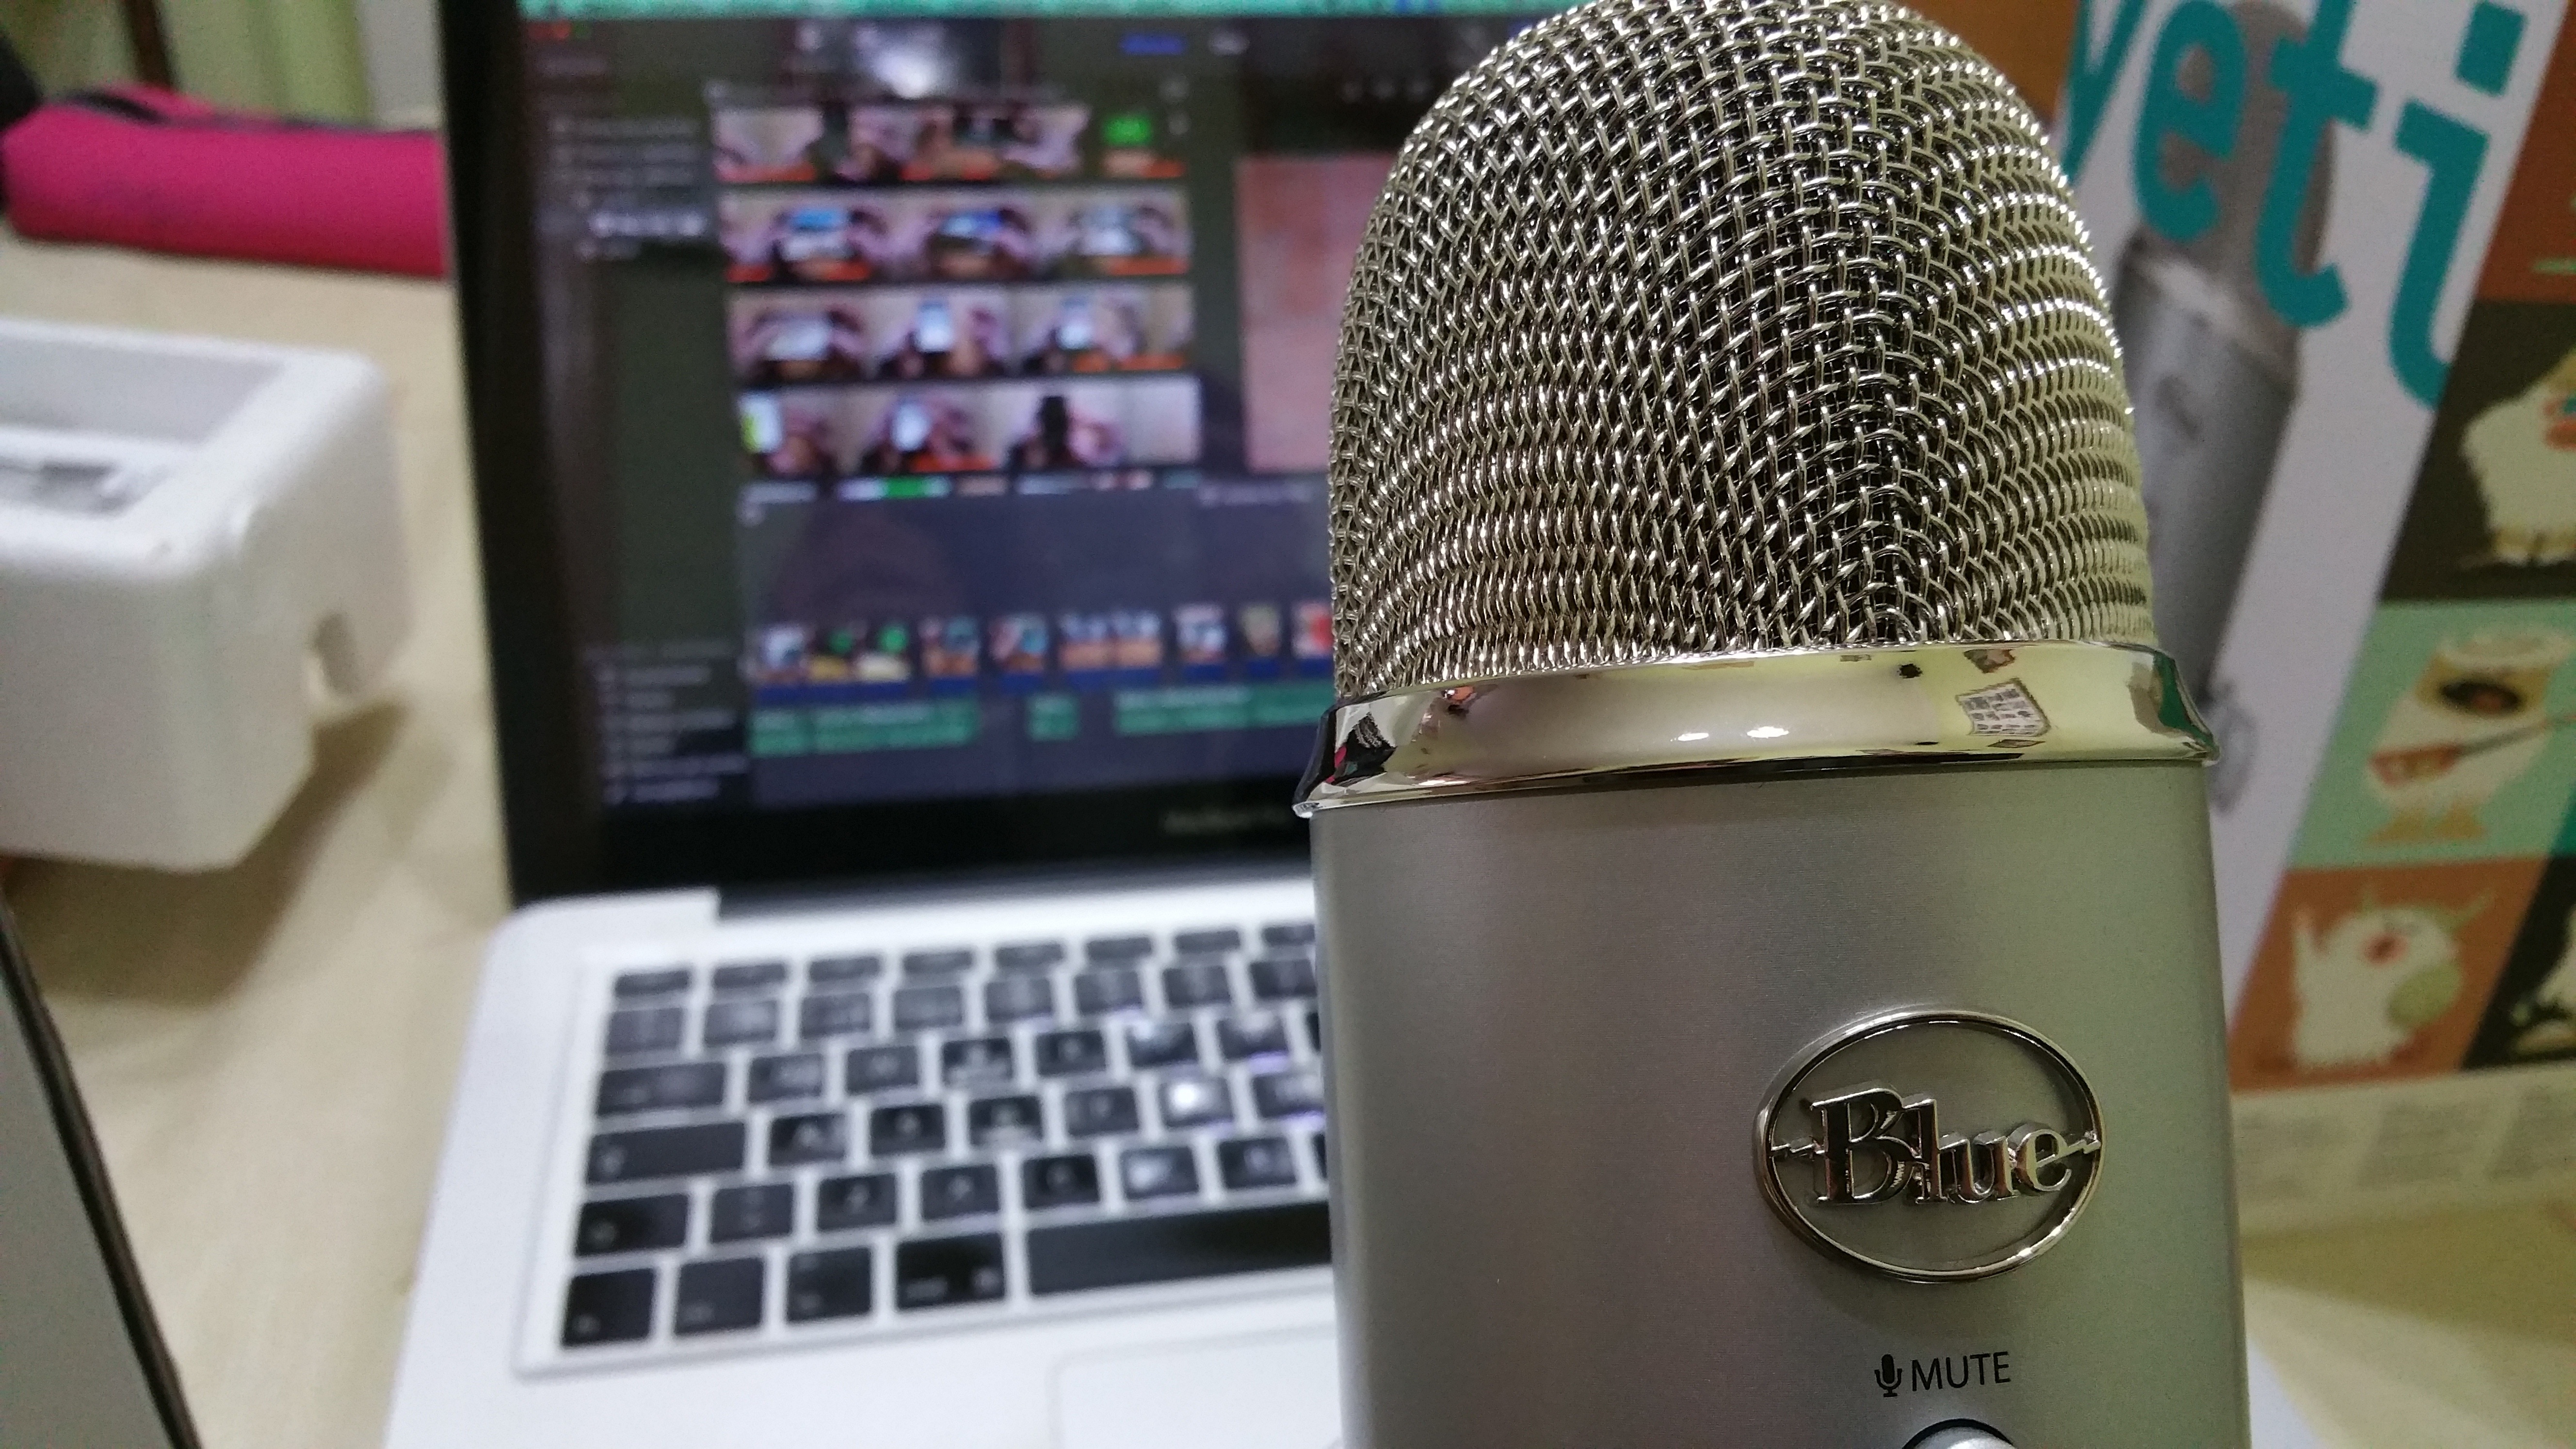 grey blue condenser microphone and macbook pro